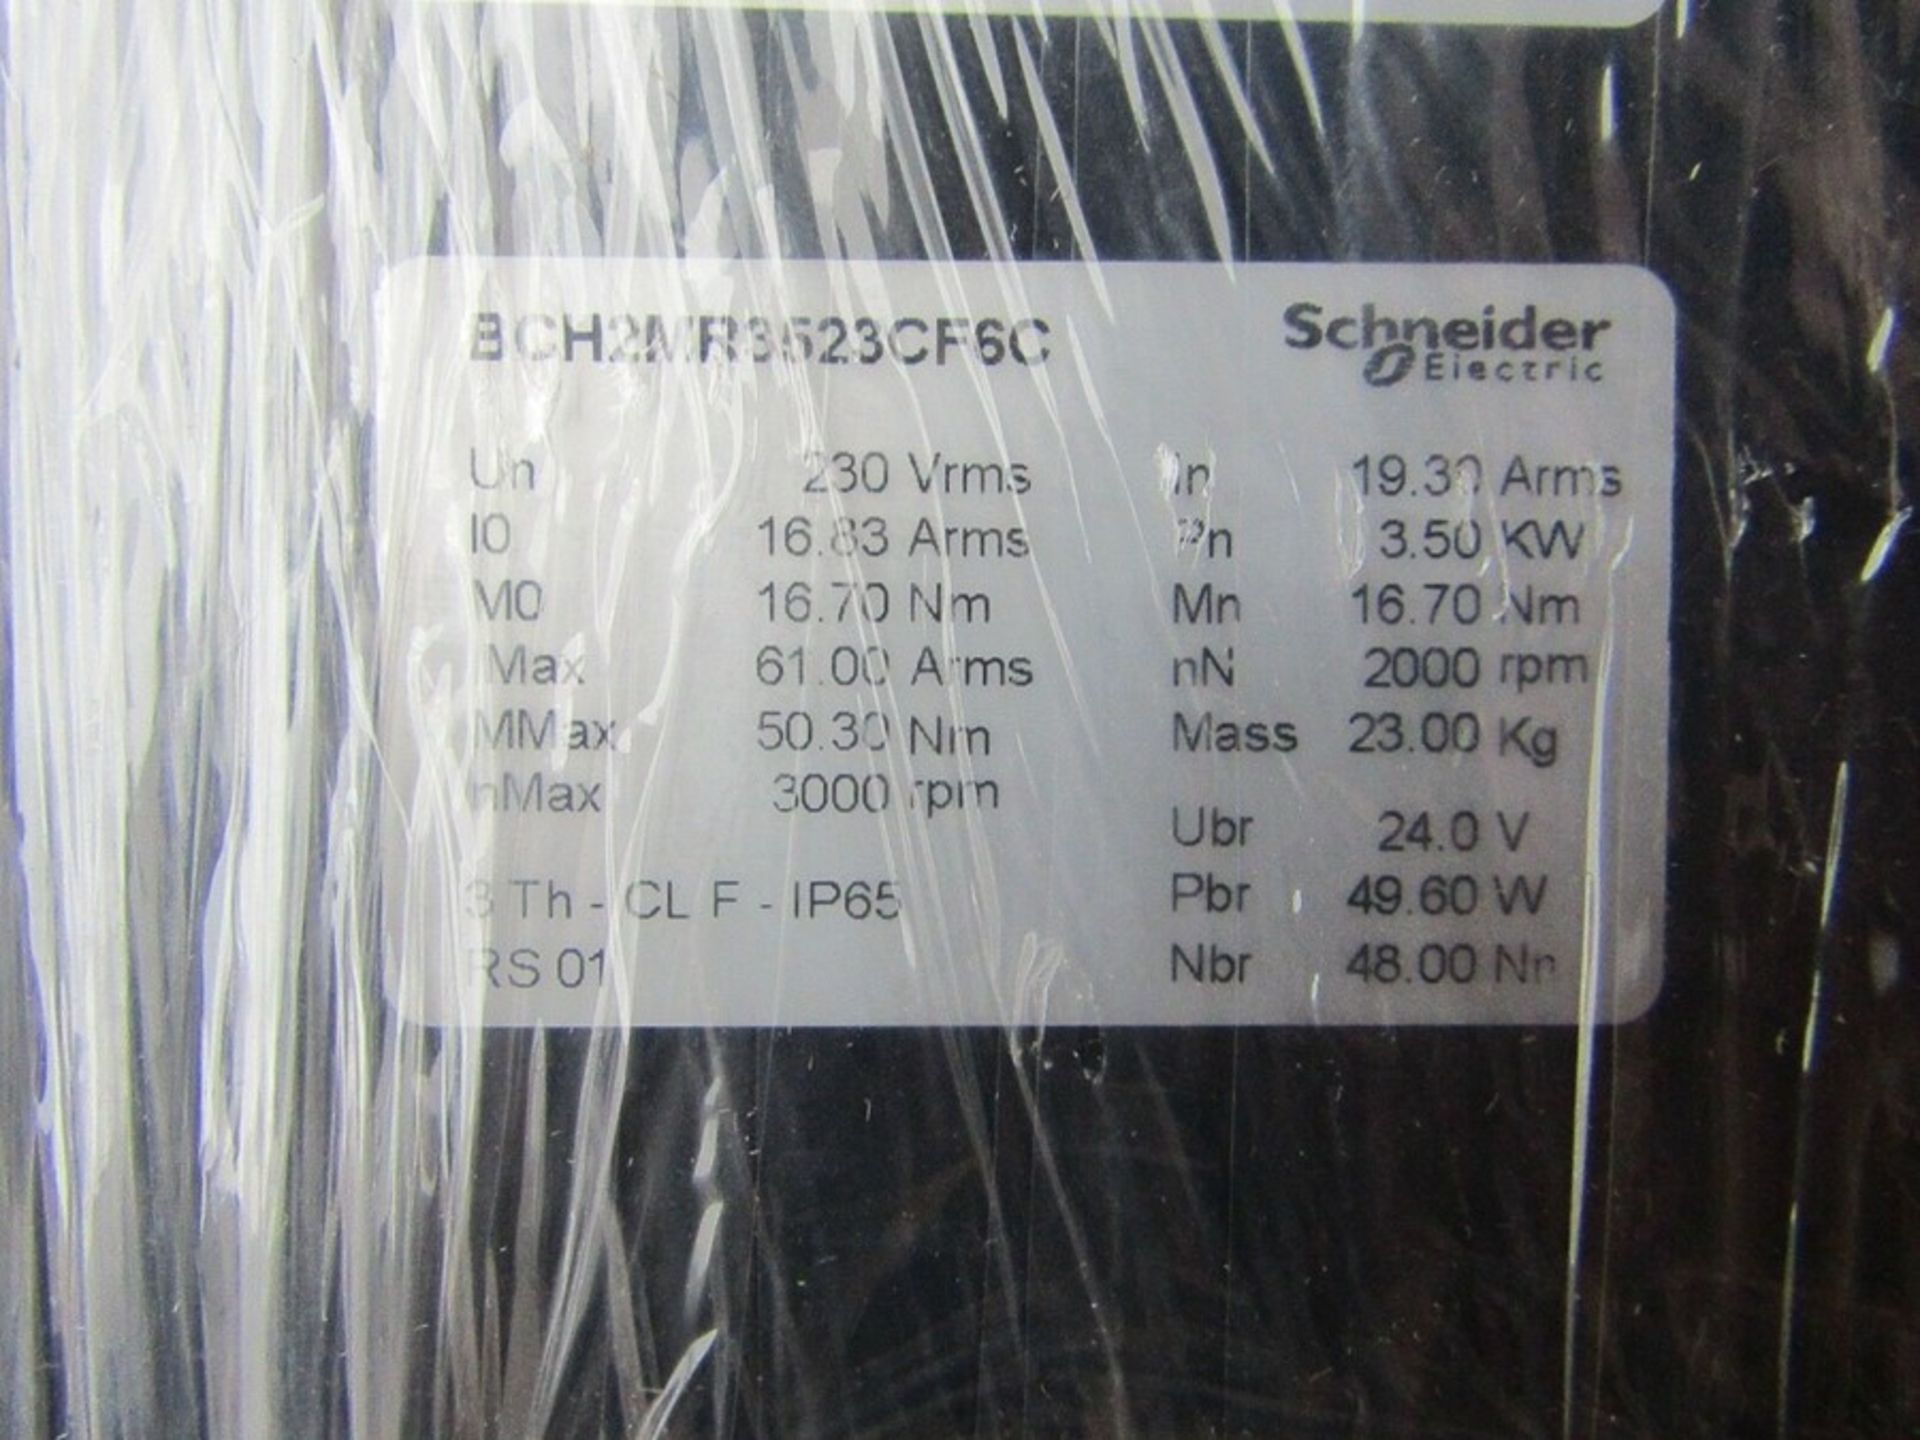 Schneider Electric 3.5kW BCH2 Servo Motor, 220V, 16.7Nm, 3000 rpm 1005fc 1110832 - Image 2 of 3